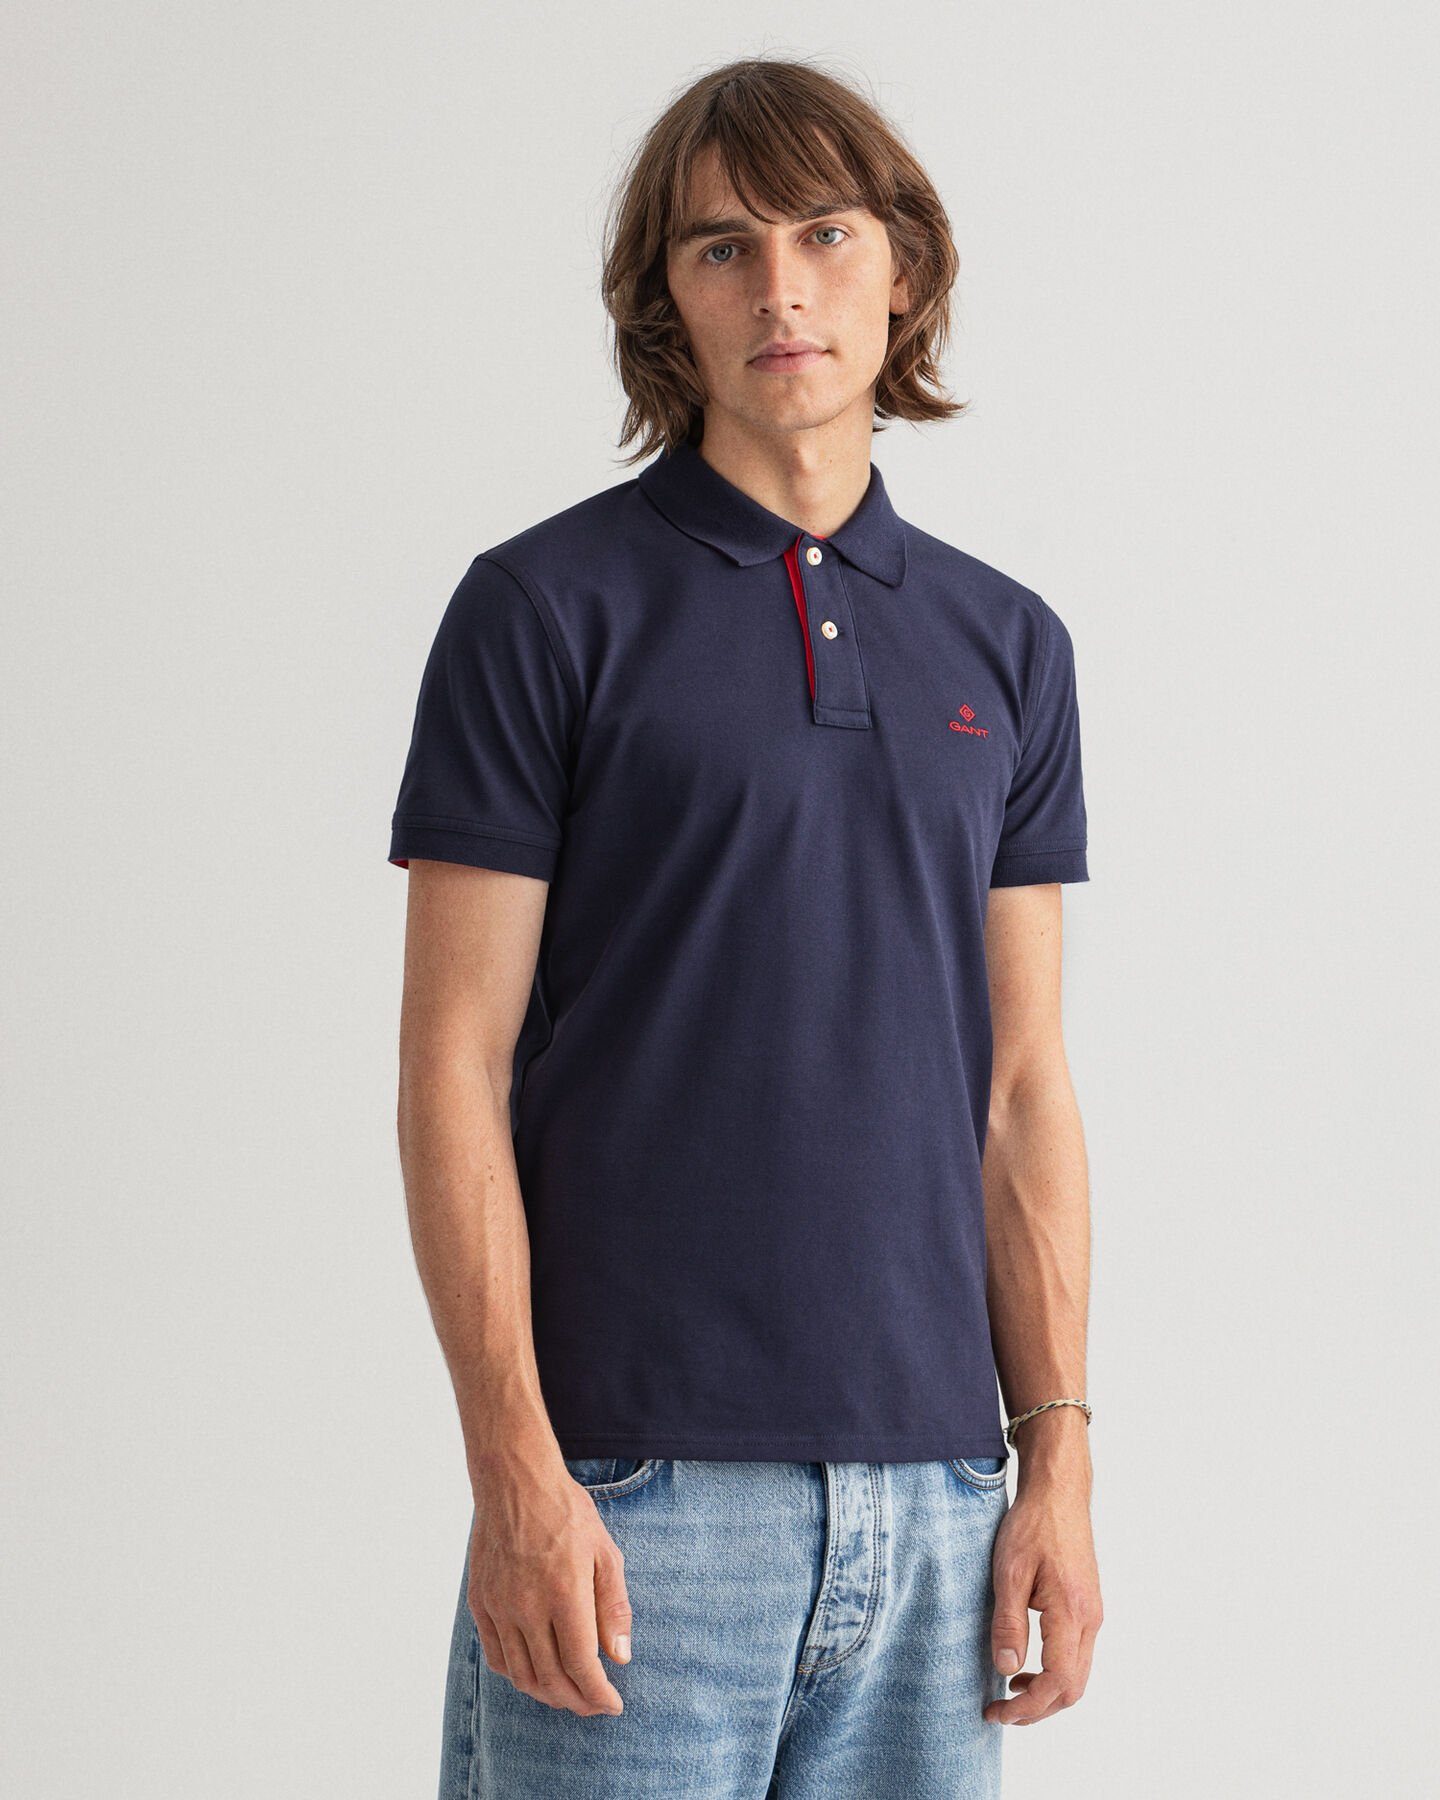 Gant mit Rugger kontrastfarbener Shirt Dunkelblau Poloshirt Poloshirt Piqué